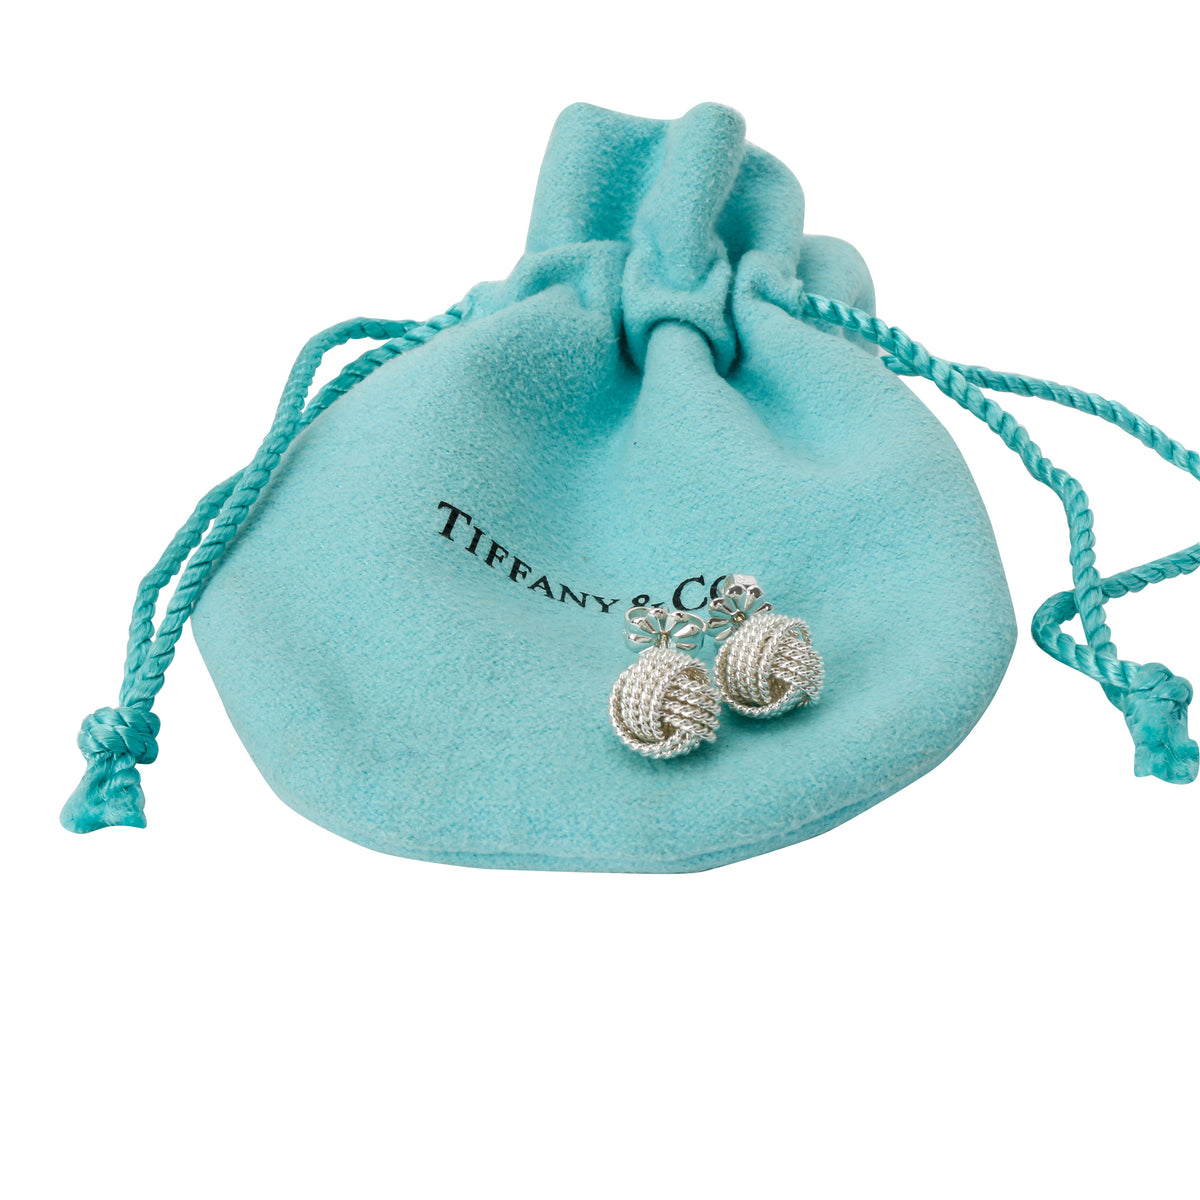 Tiffany & Co. Somerset Knot Stud Earring in  Sterling Silver